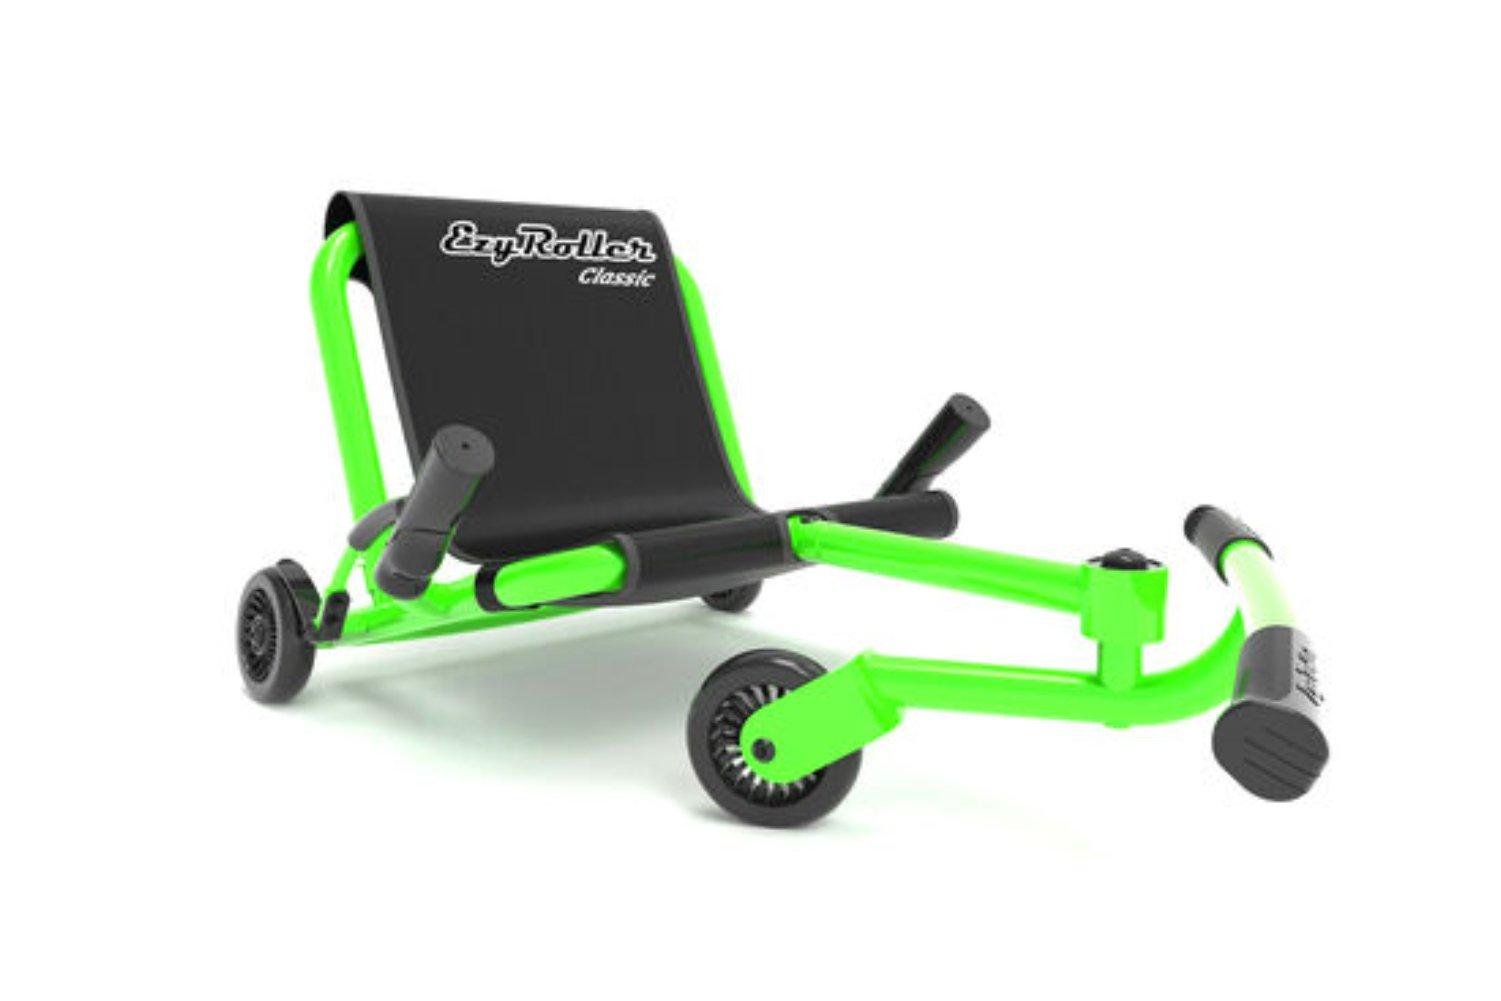 Ezy Roller Classic Kids Kart Trike Weave Ride On - Lime Green